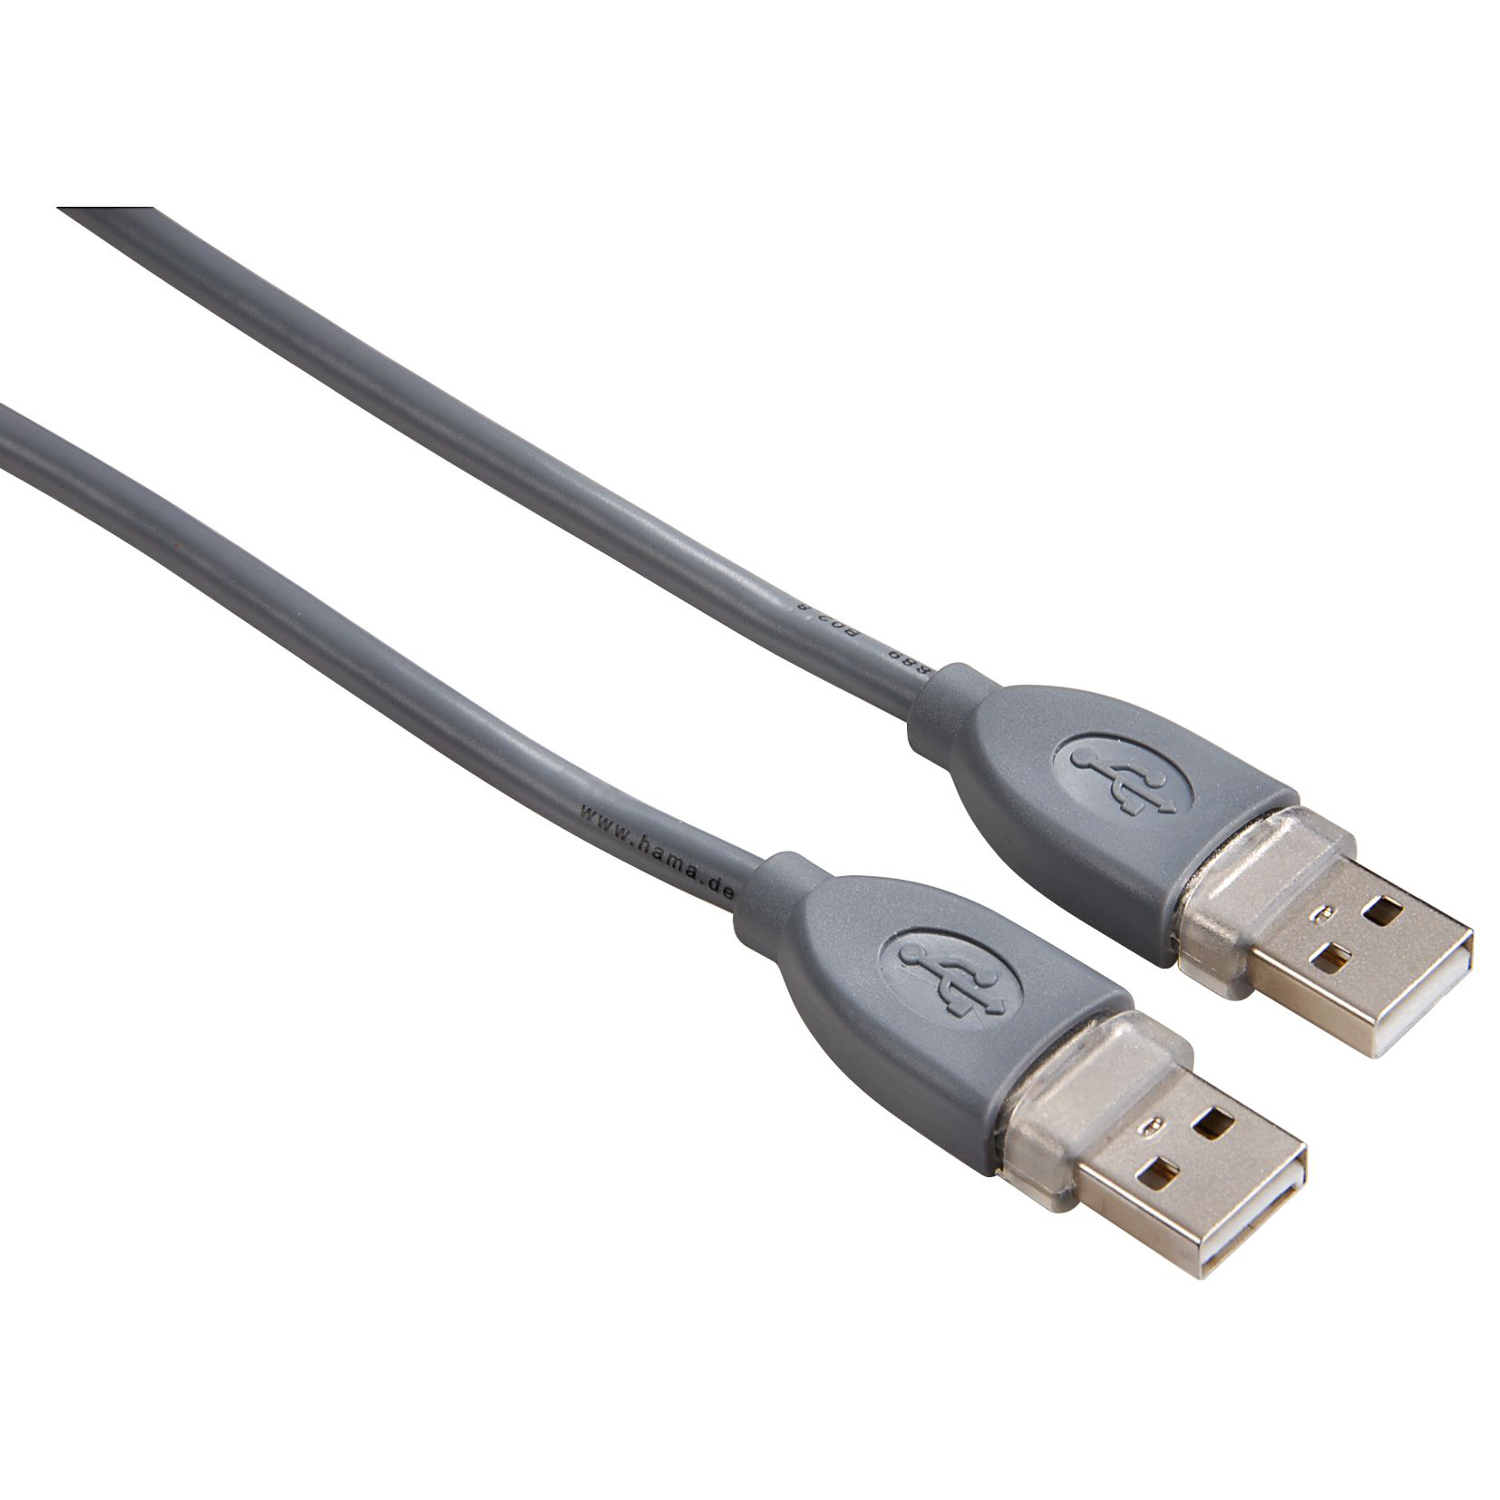  Cablu USB 2.0 Hama 39664 Tip A-A, 1.8 m 